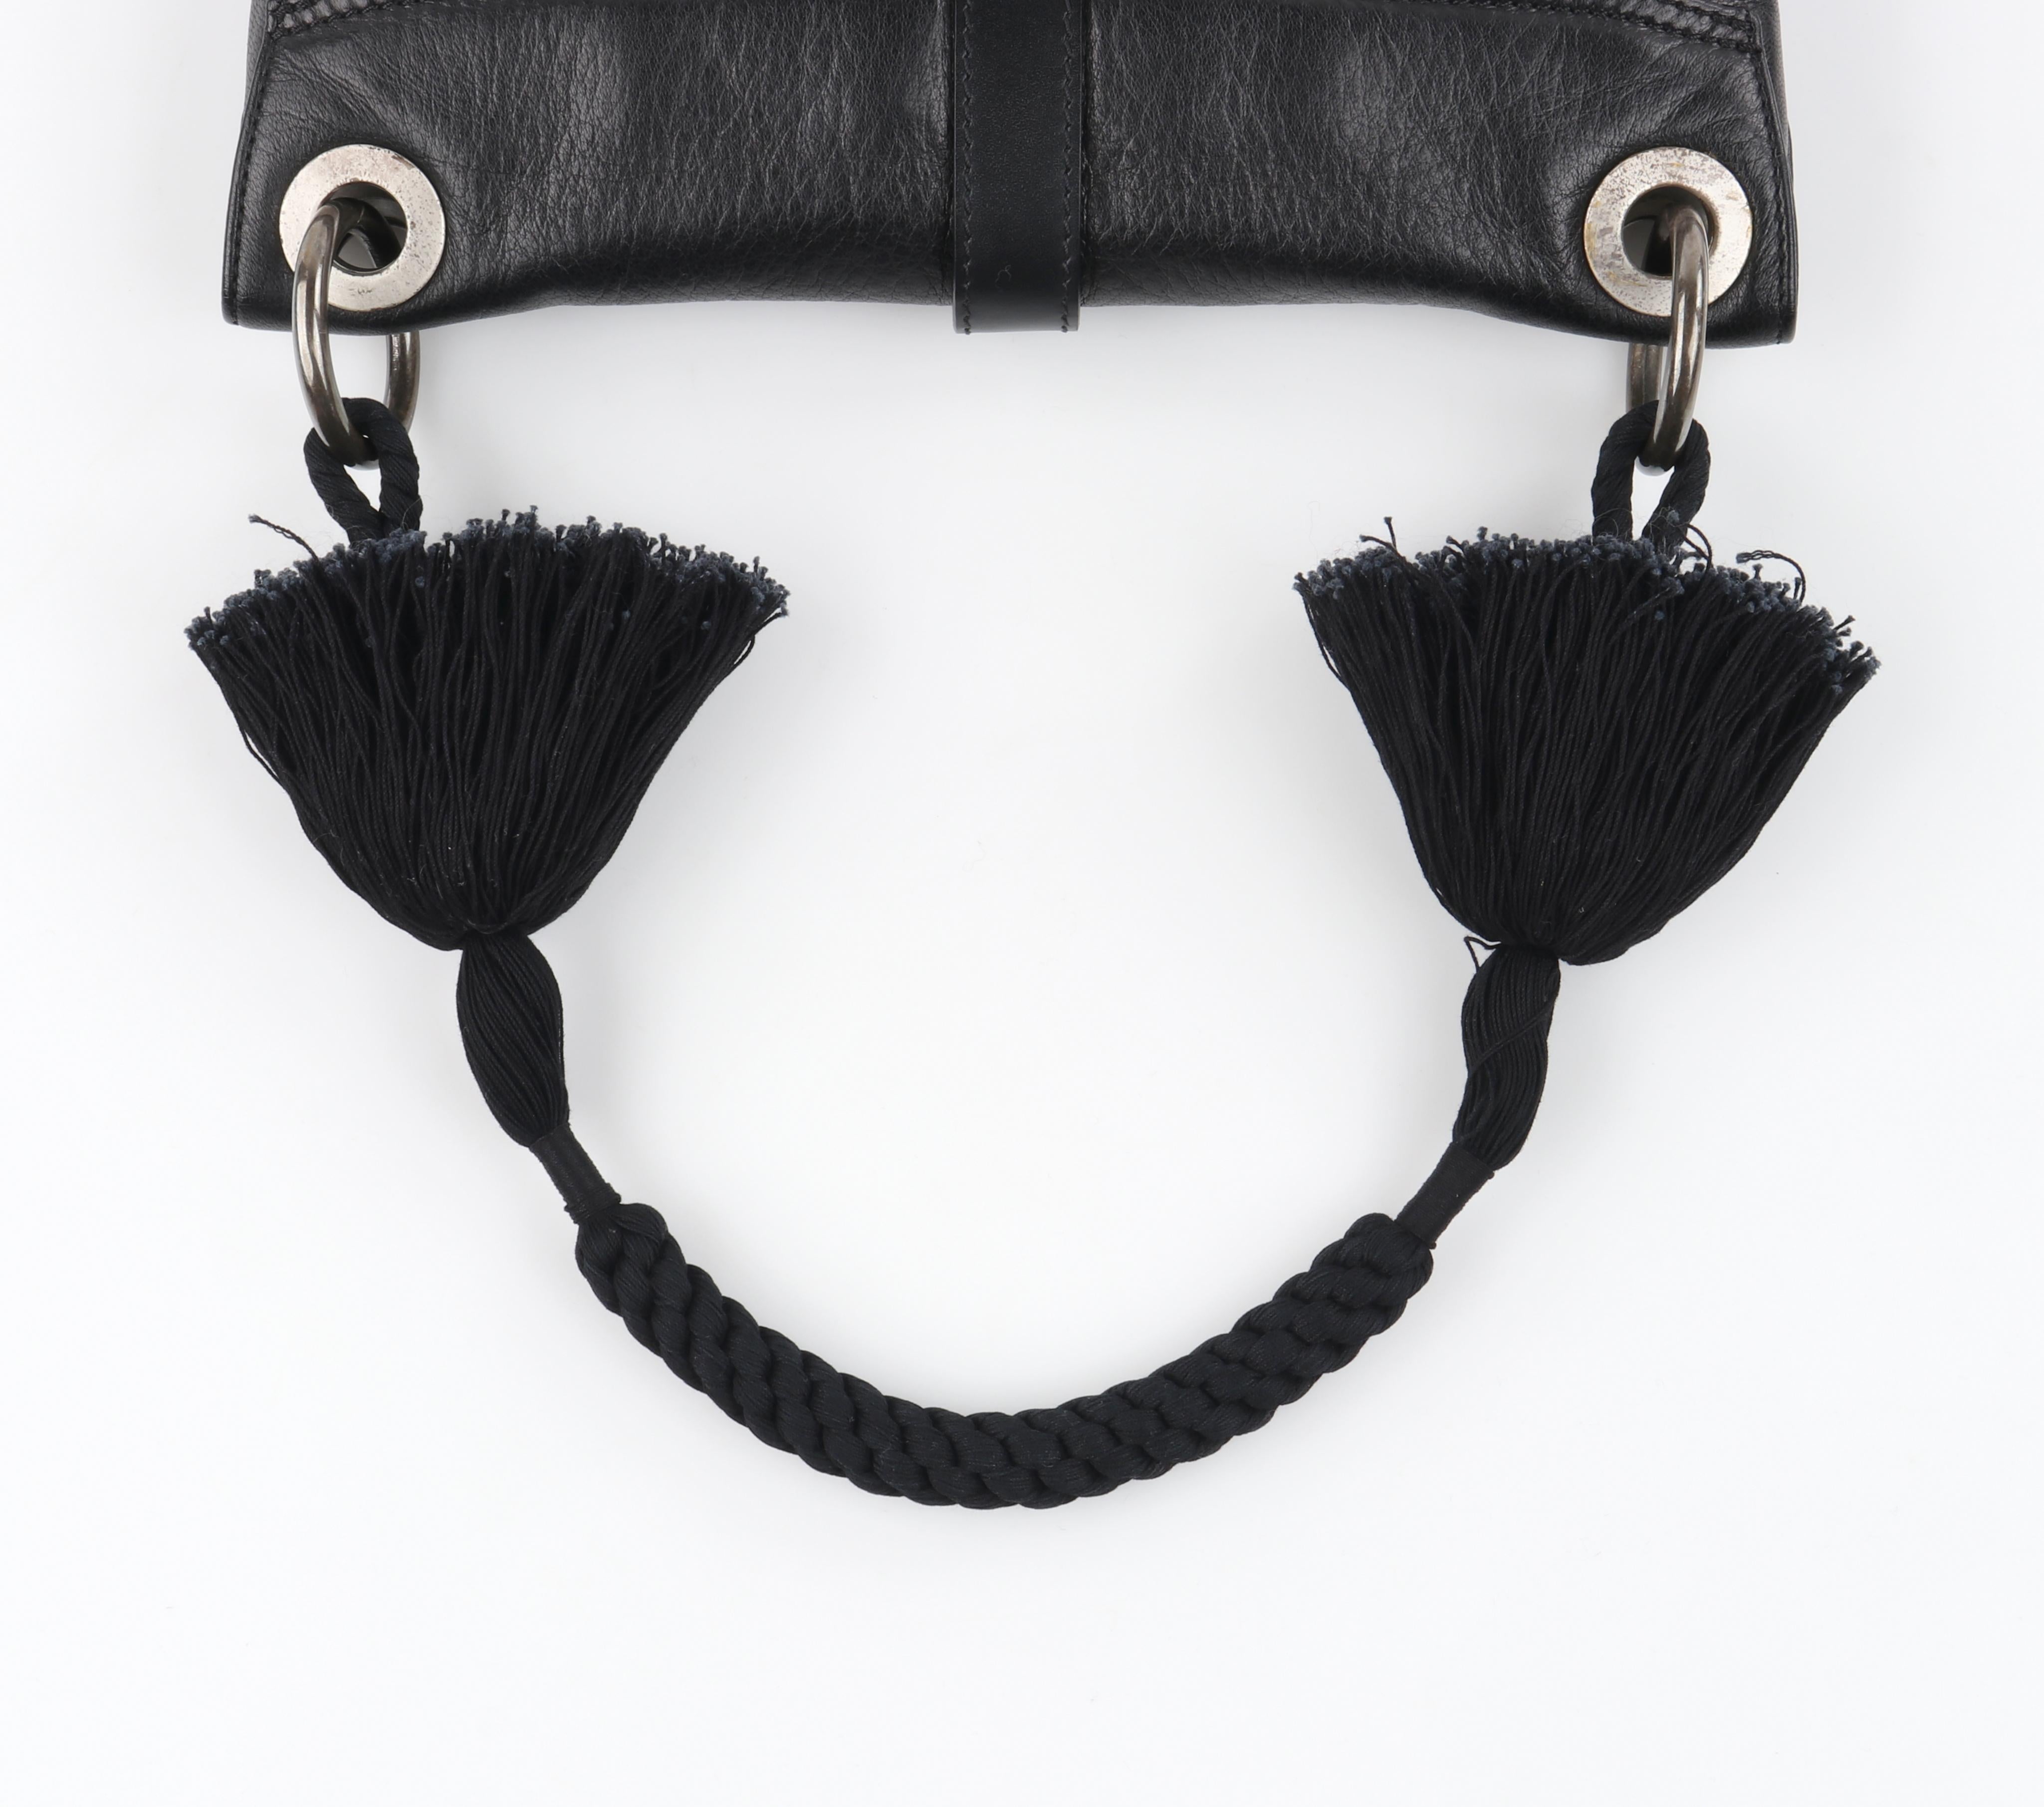 LANVIN “Jeanne” Black Leather Braided Pom Pom Tassel Strap Flap Clutch Handbag  1